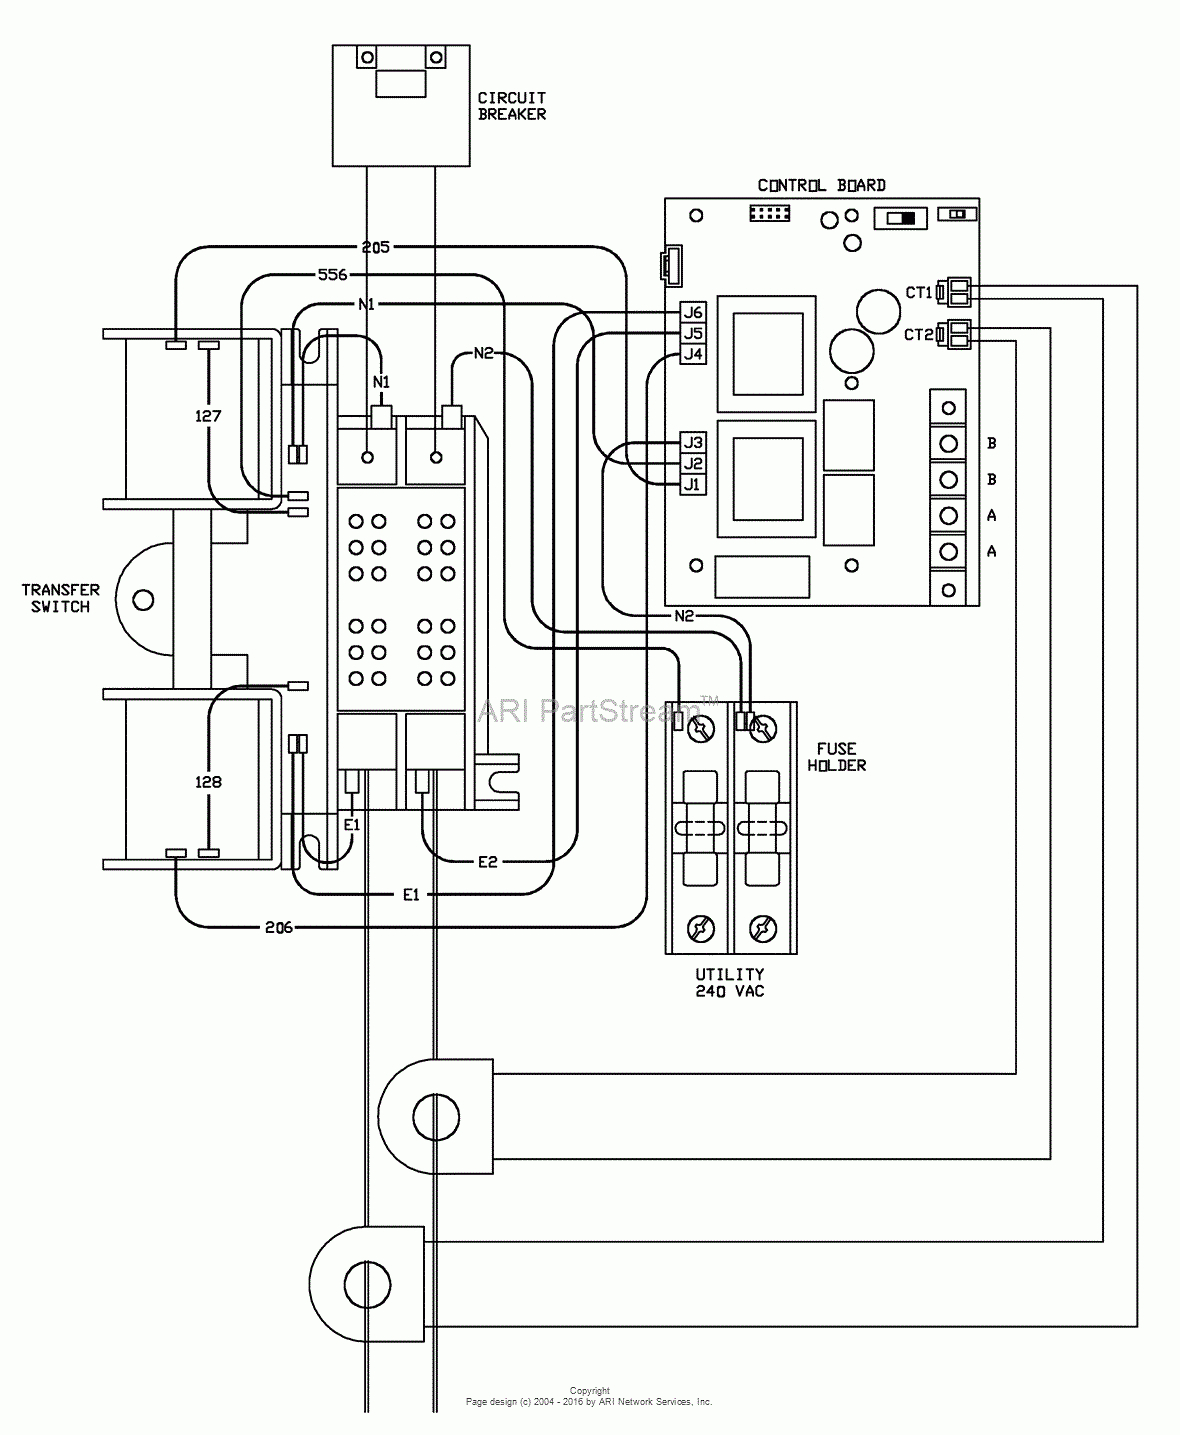 Generac Transfer Switch Wiring Diagram | Manual E-Books - Generac 200 Amp Transfer Switch Wiring Diagram